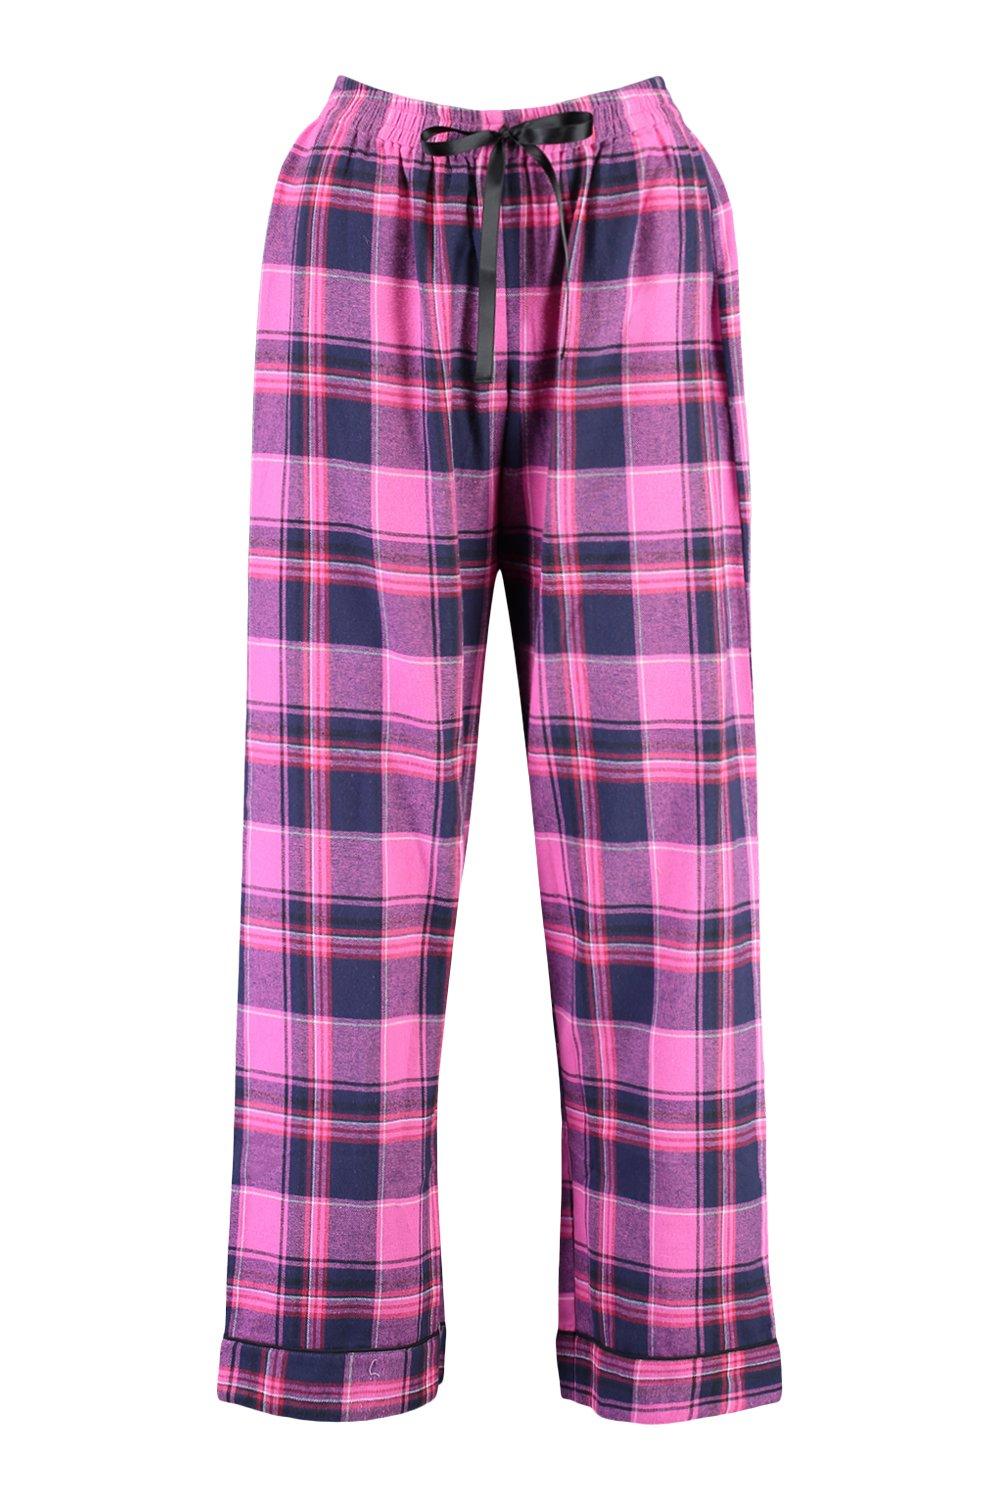 Pink Flannel Pajama Pants Best Sale | bellvalefarms.com